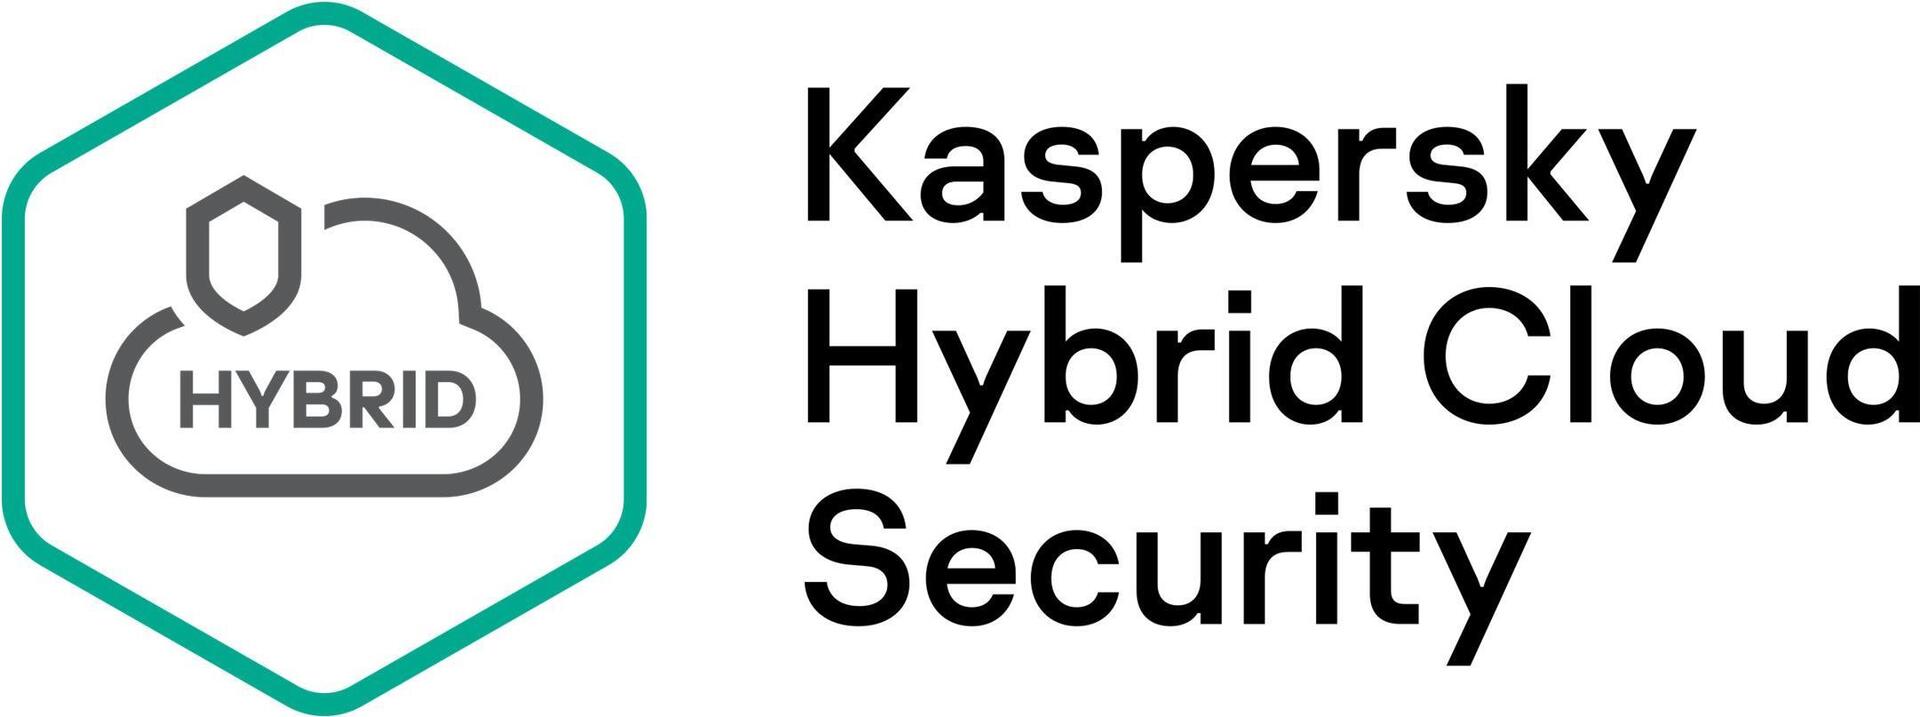 Kaspersky Hybrid Cloud Security Desktop (KL4155XAND8)